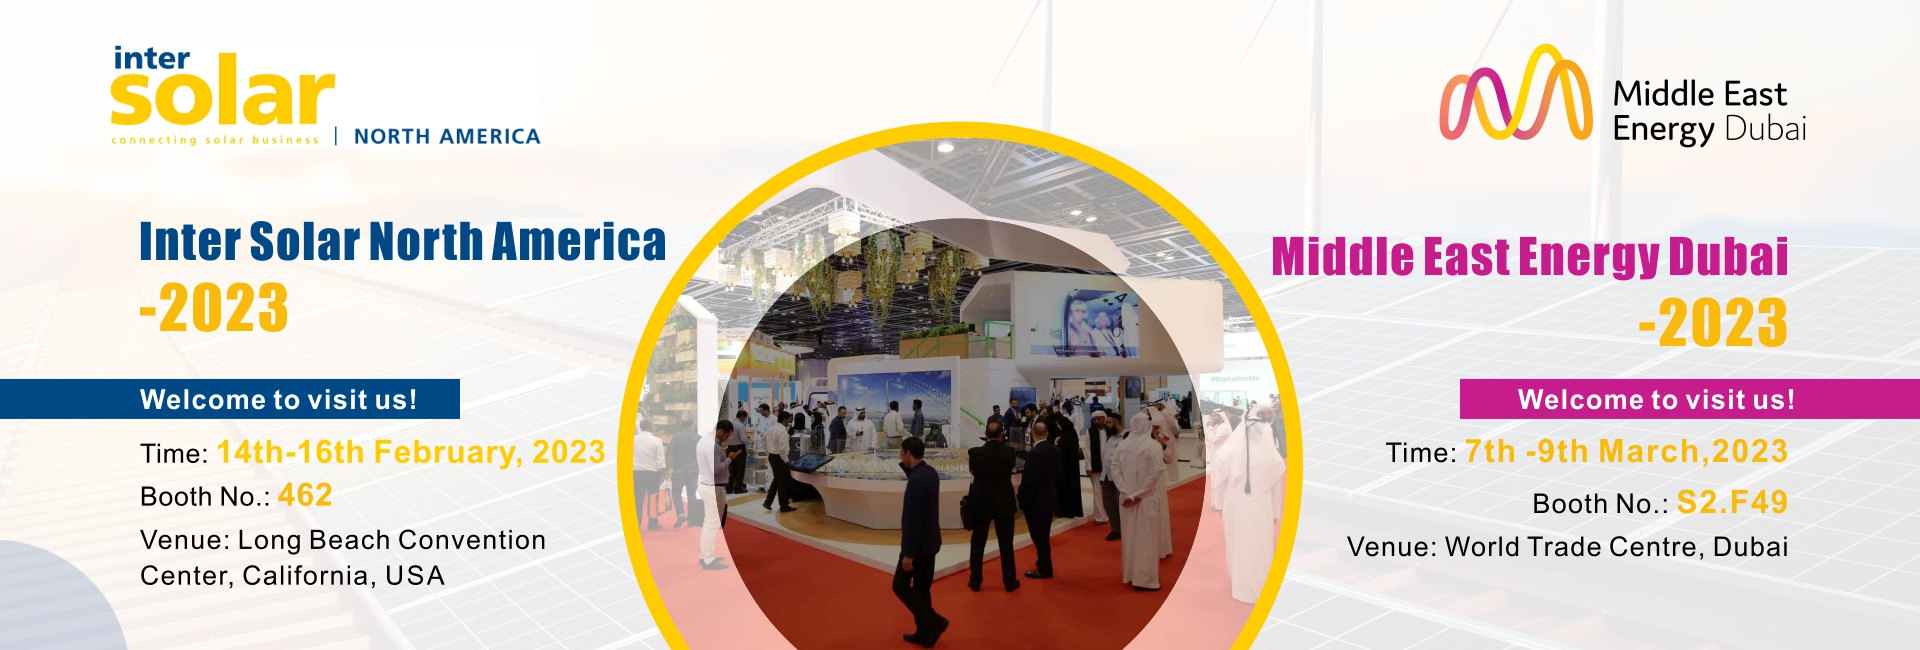 2023 American Solar Corporation Exhibition and 2023 Middle East Dubai Solar Power Exhibition